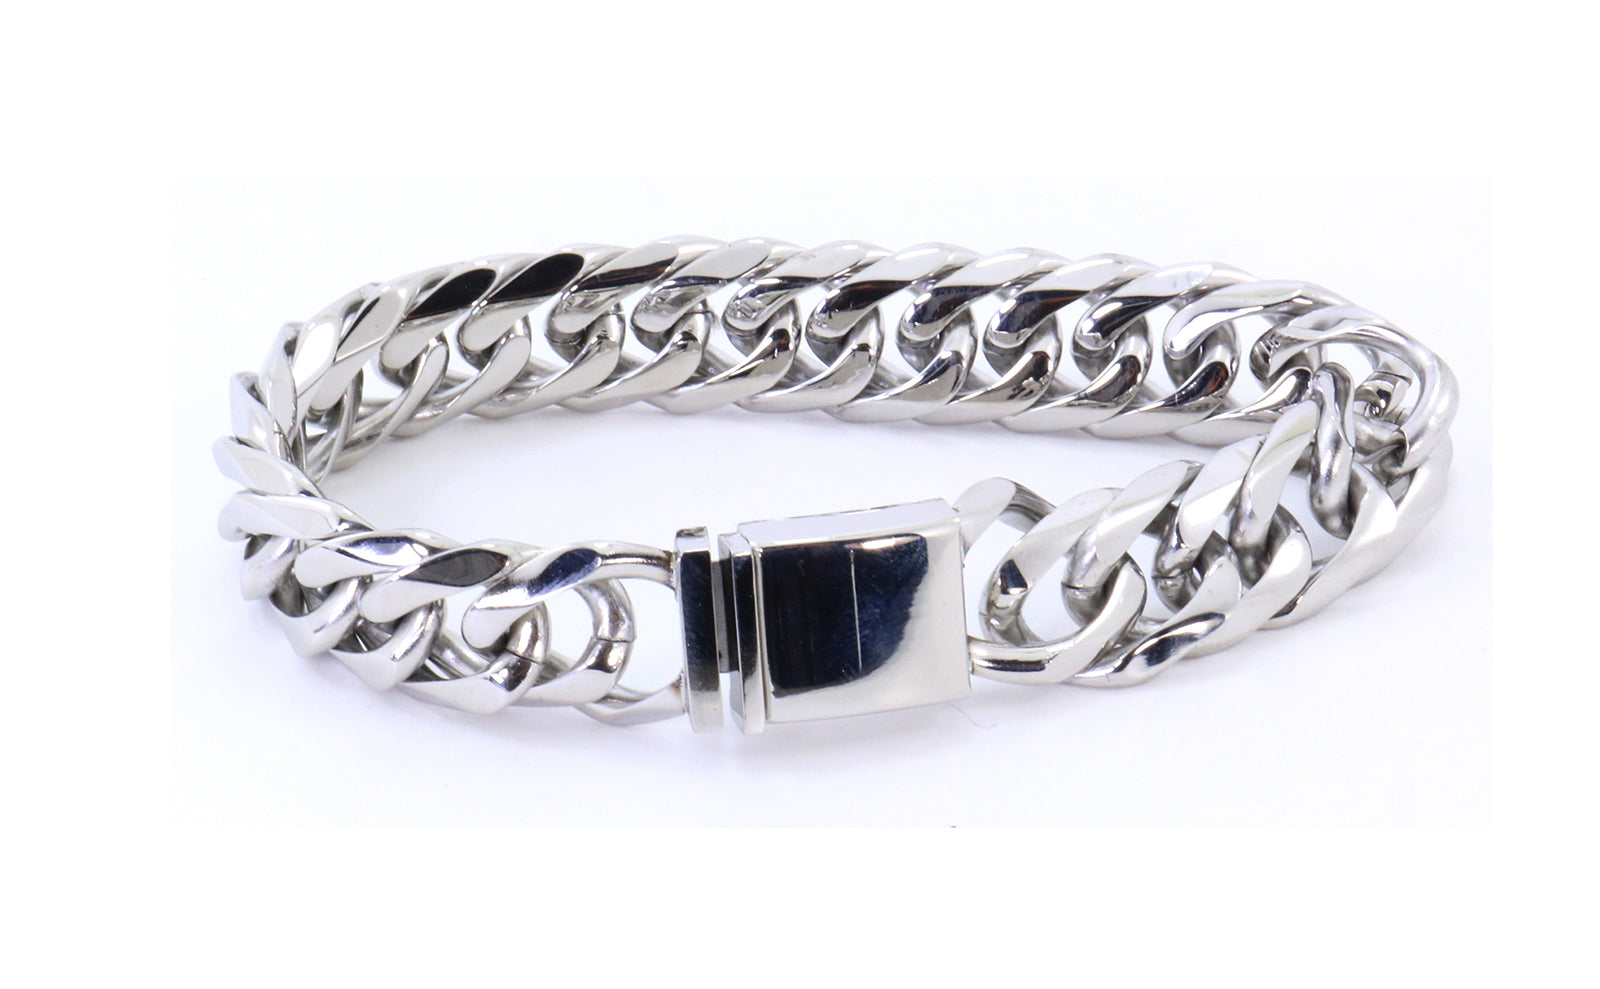 Solid Stainless Steel Link Bracelet